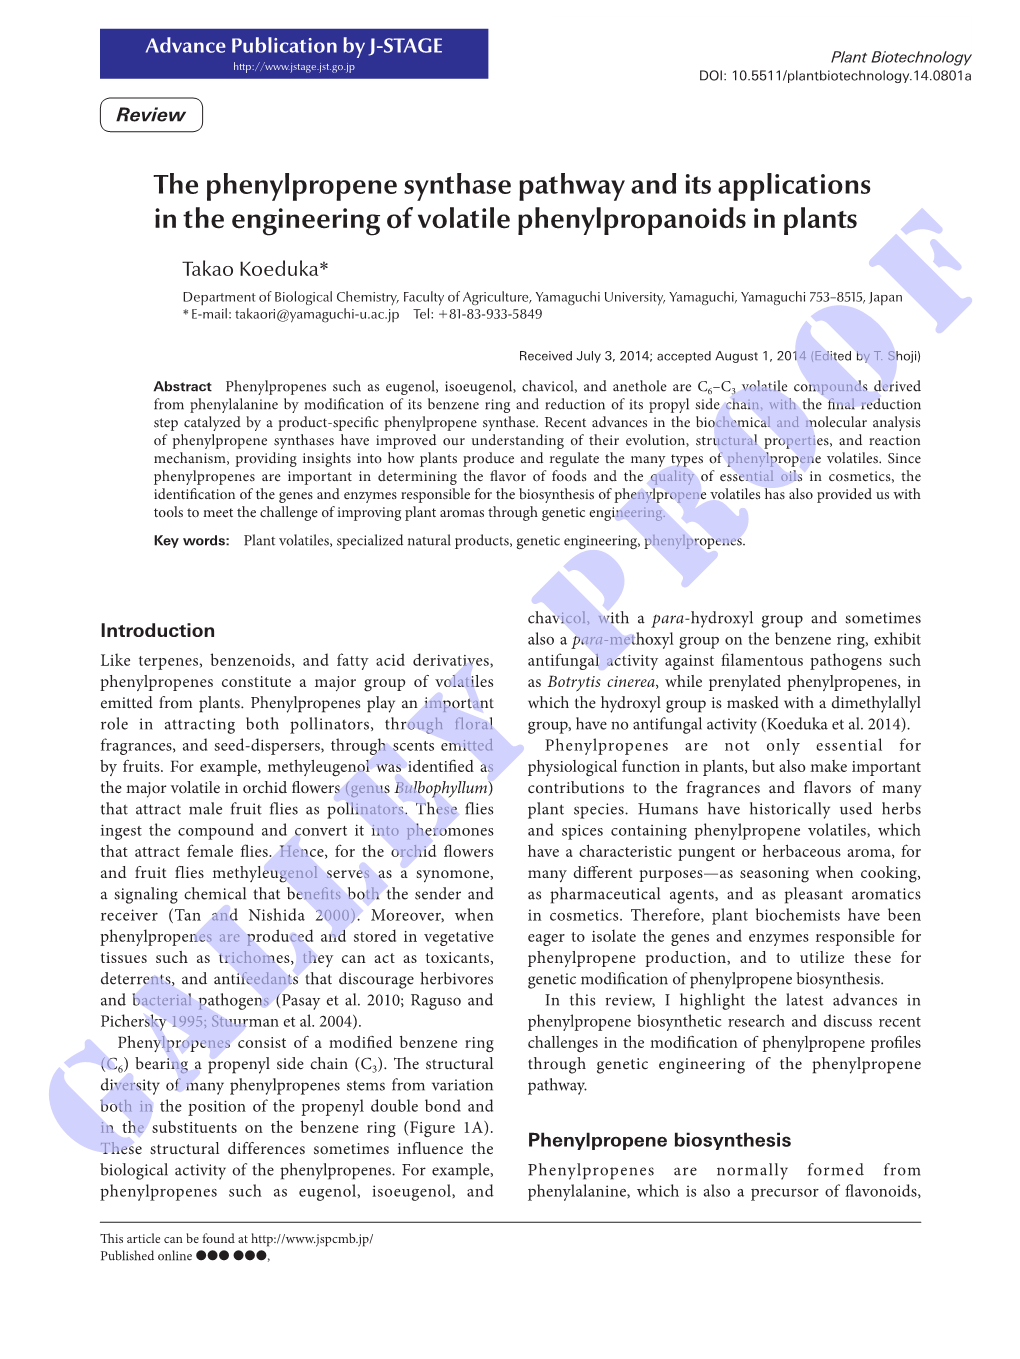 Plant Biotechnol. 31: 14.0801A (2014) [Adv.Pub.]